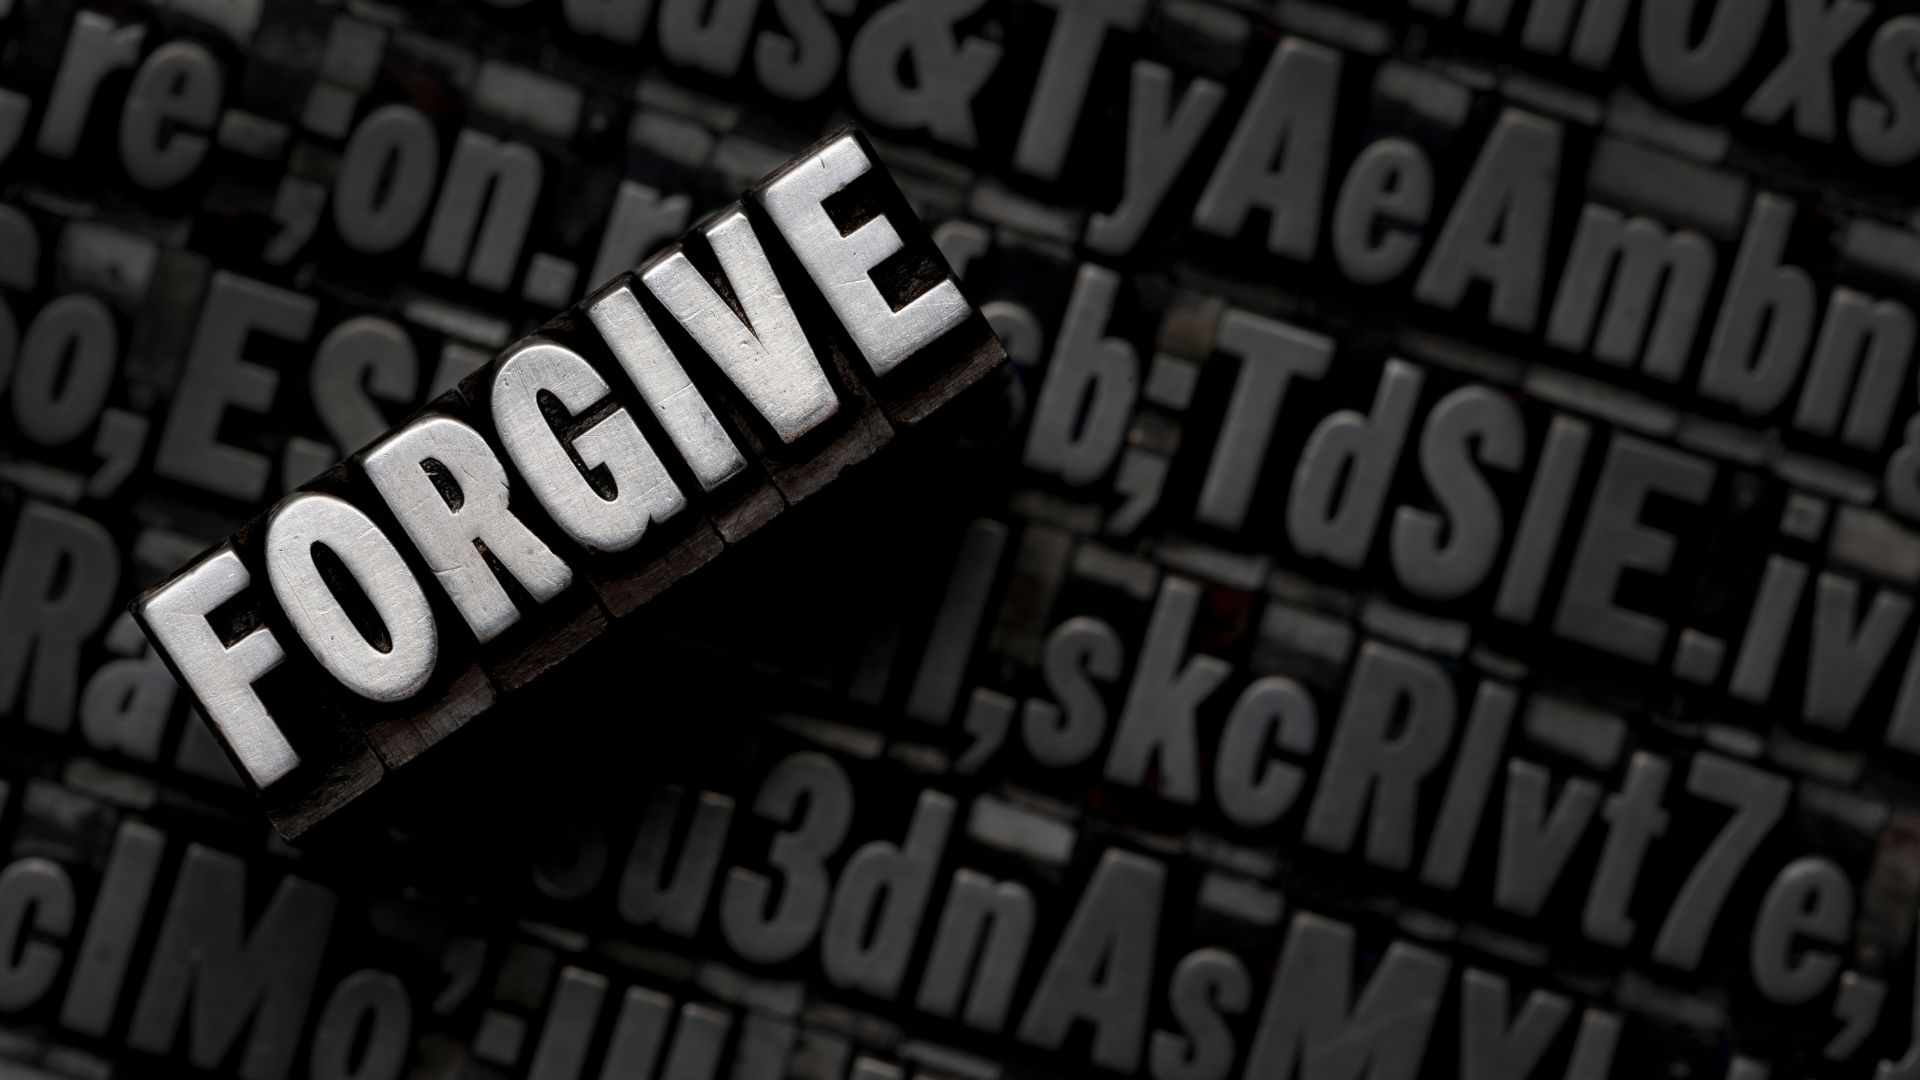 Benefits of Self-Forgiveness